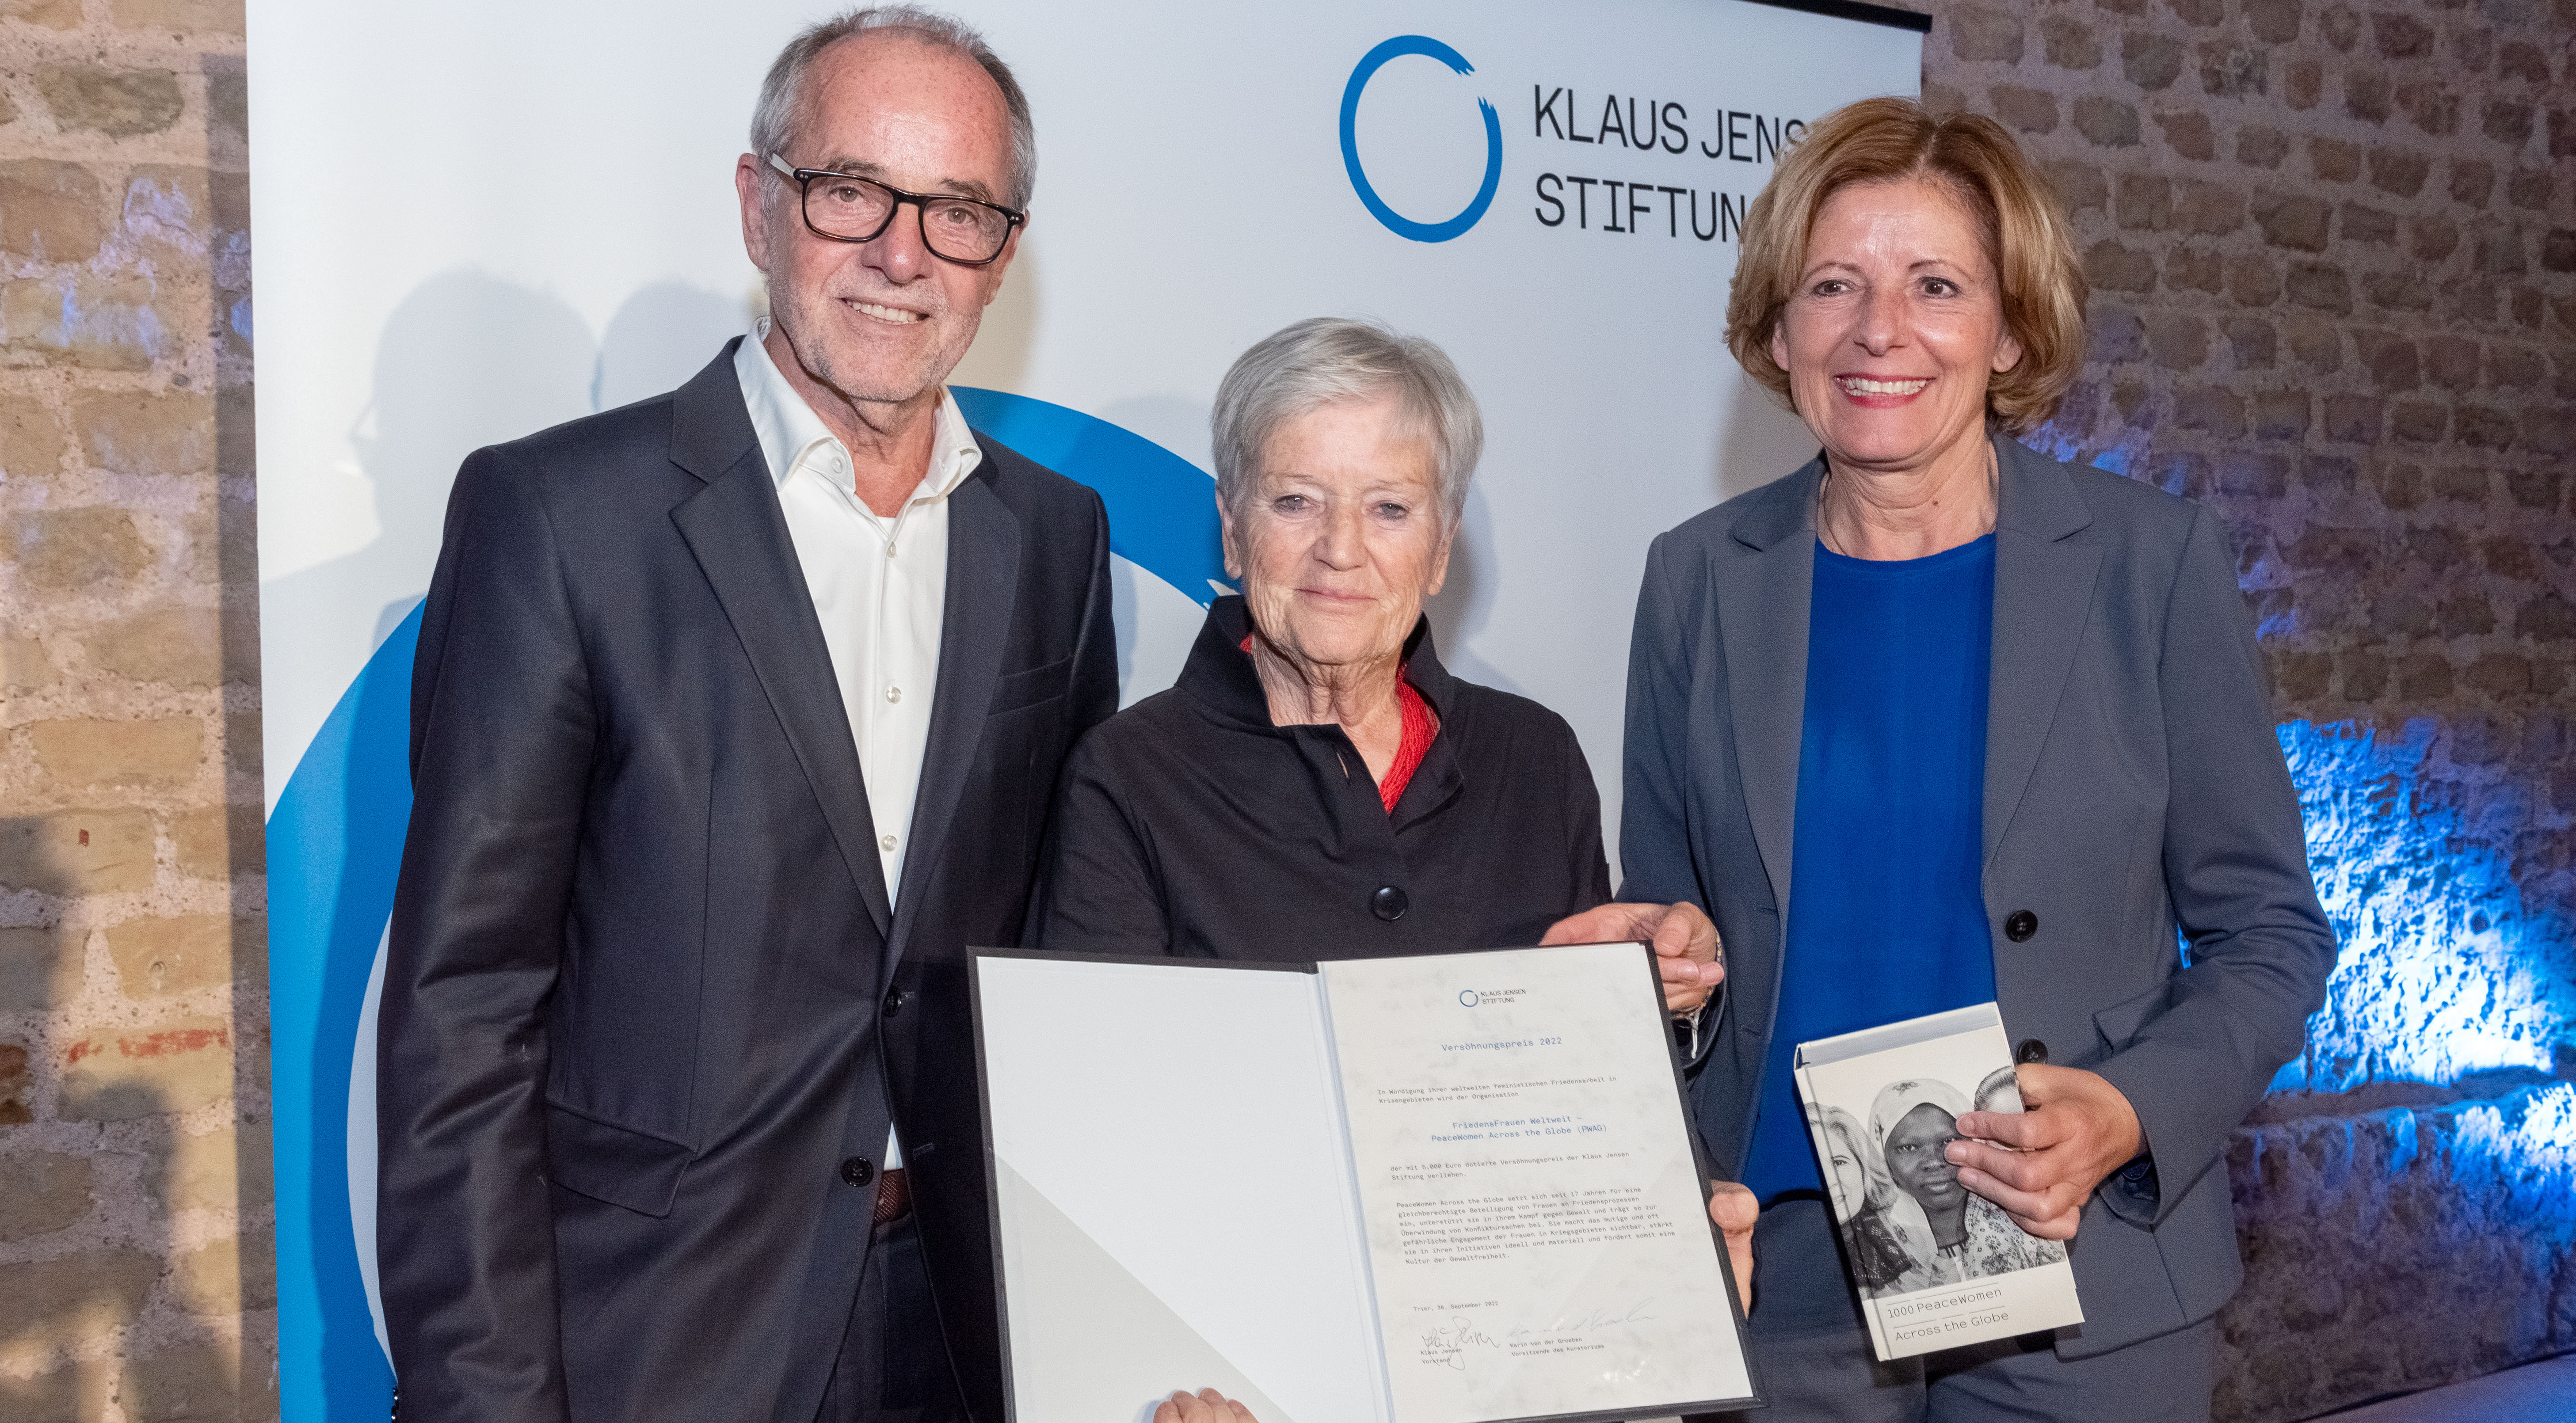 PeaceWomen Across the Globe receives Reconciliation Award of the Klaus Jensen Foundation